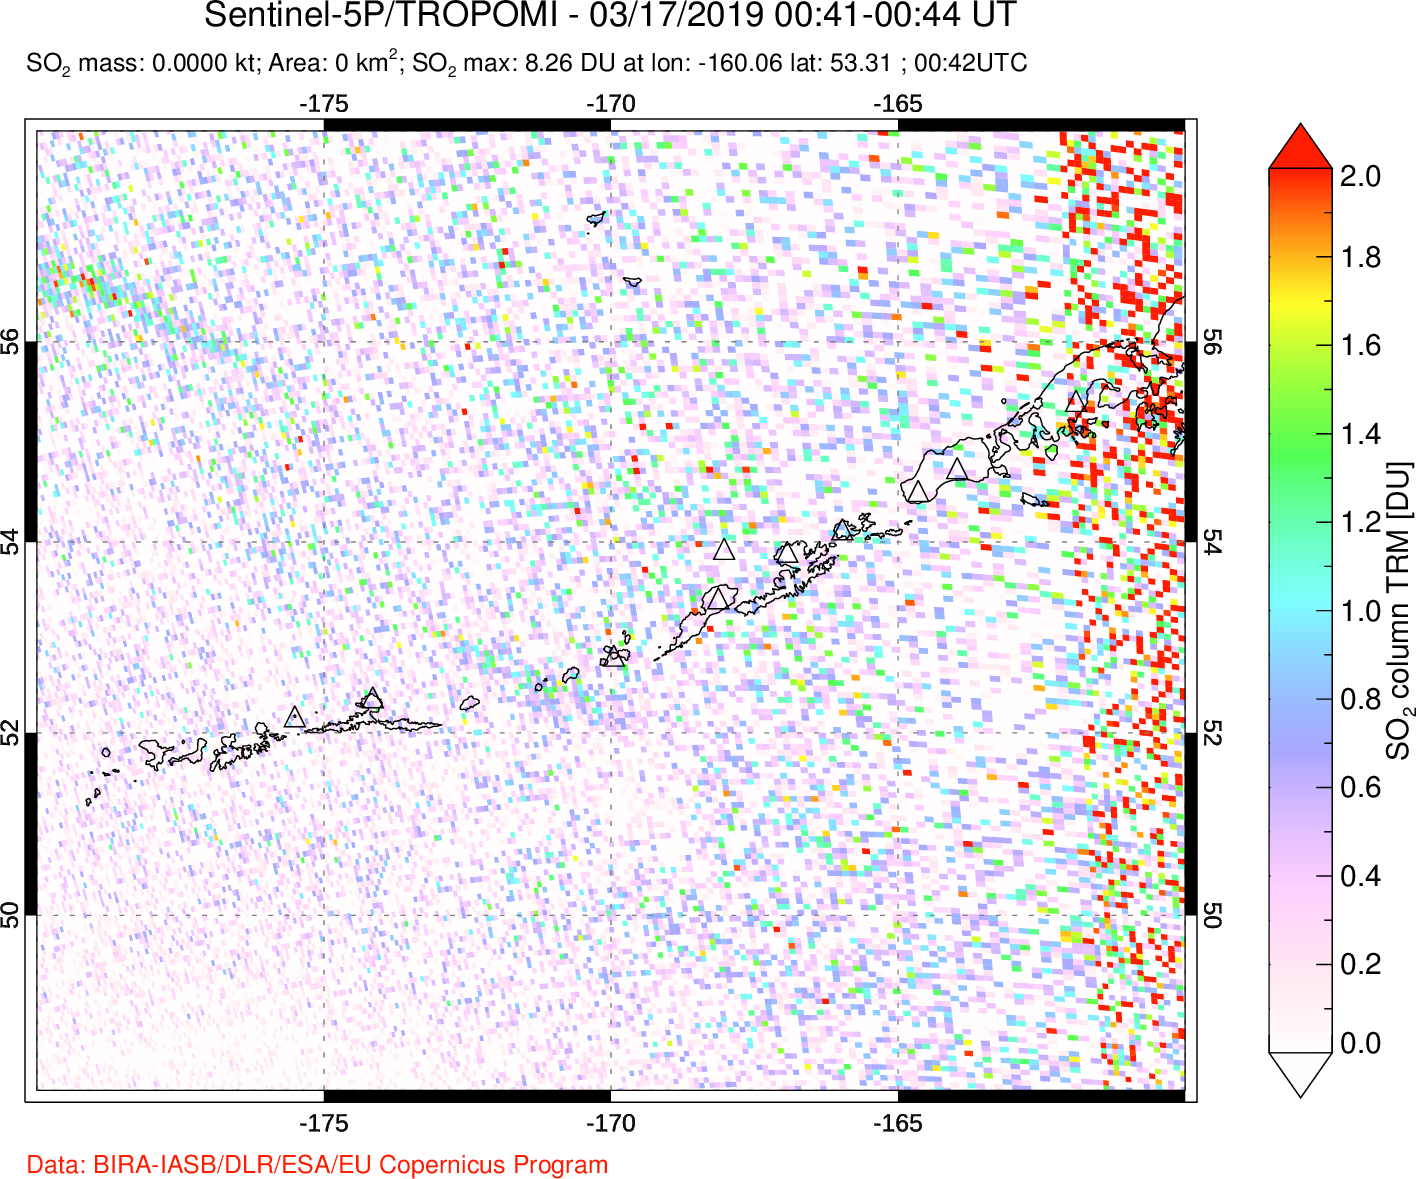 A sulfur dioxide image over Aleutian Islands, Alaska, USA on Mar 17, 2019.